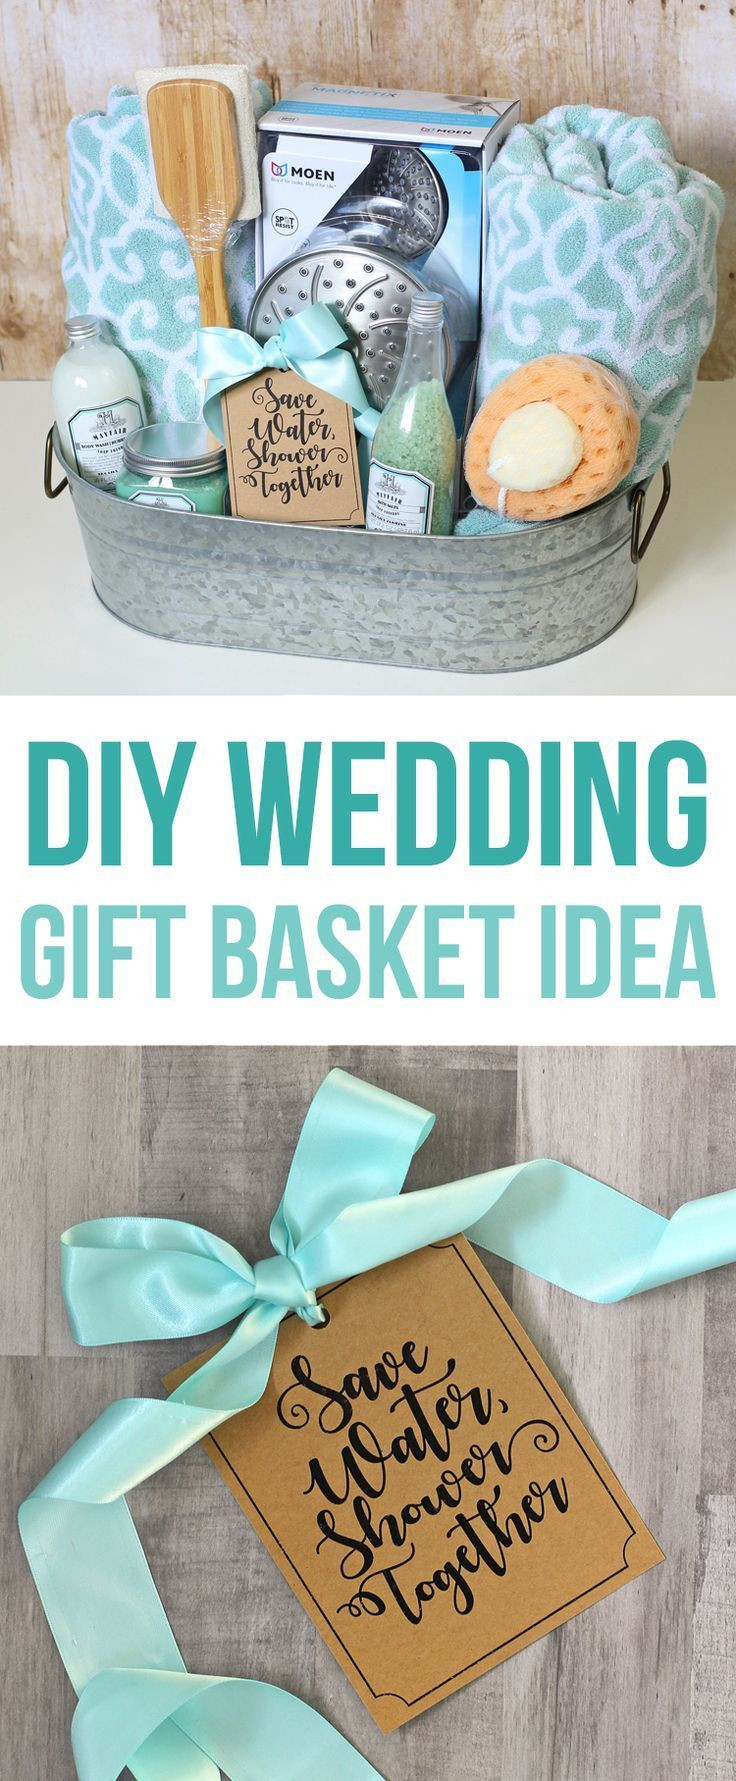 Ideas For A Wedding Gift
 Shower Themed DIY Wedding Gift Basket Idea